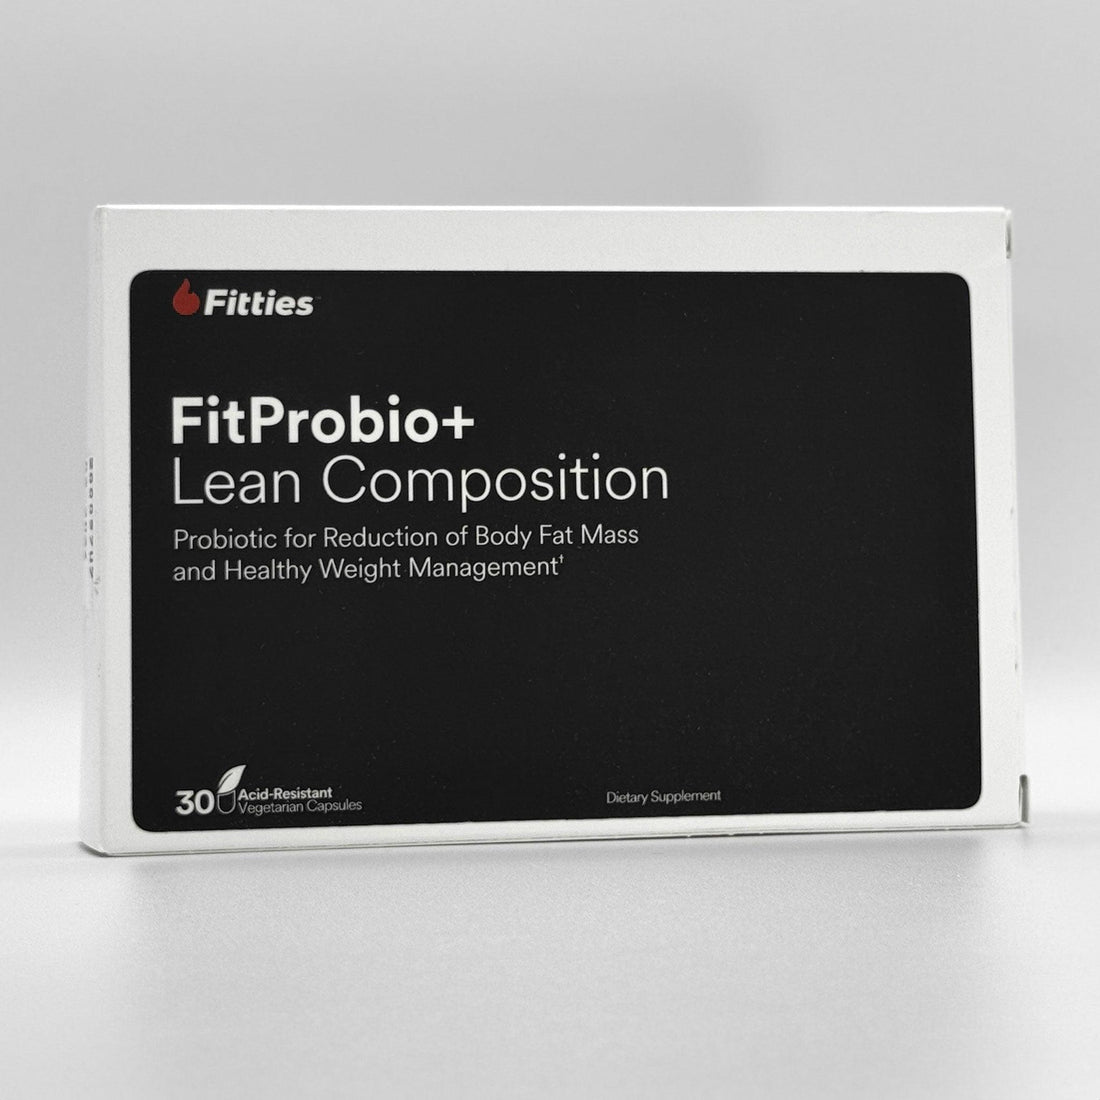 Fitties FitProbio+ front label